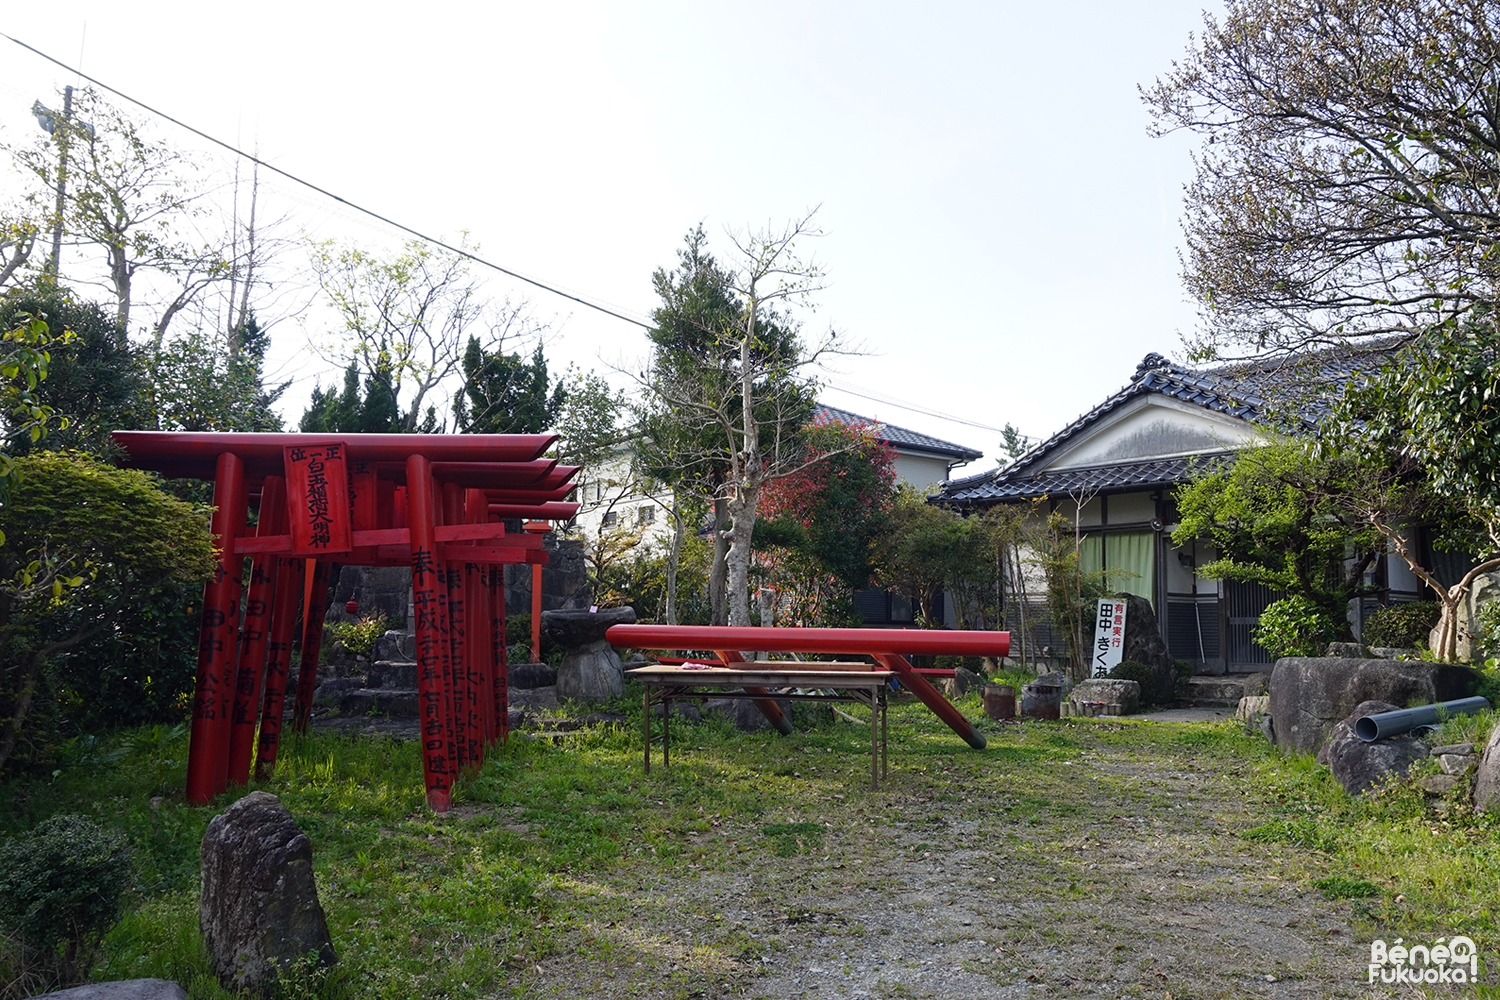 Réparateur de torii, Fukuyoshi, Fukuoka